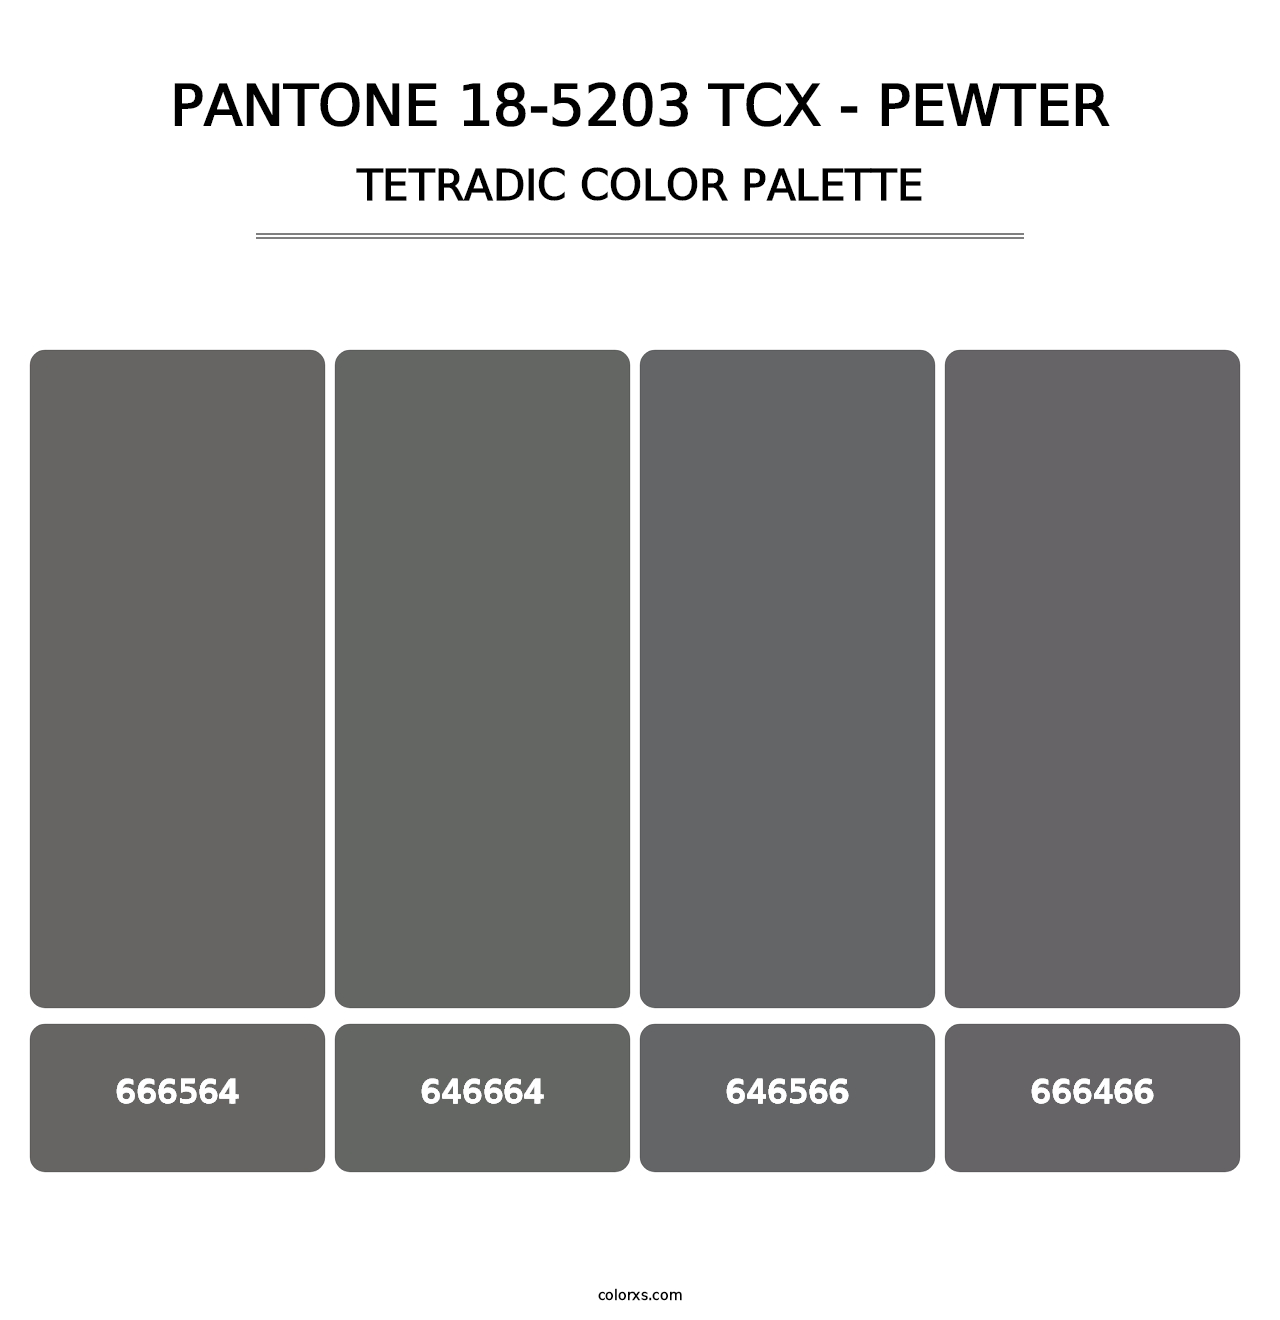 PANTONE 18-5203 TCX - Pewter - Tetradic Color Palette